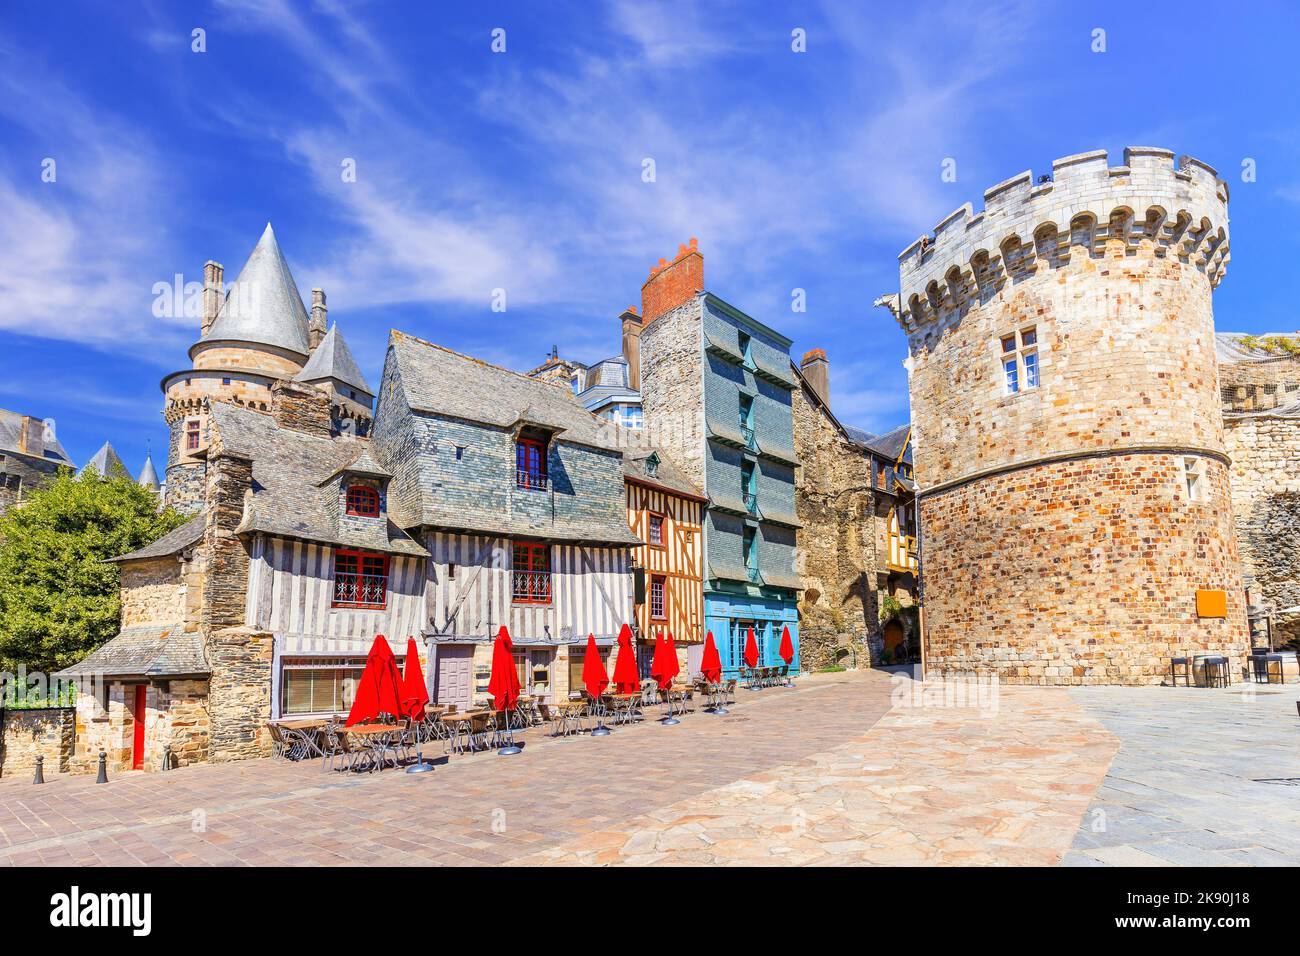 Bretagne, Frankreich. Die mittelalterliche Stadt Vitre mit dem berühmten Chateau de Vitre. Stockfoto